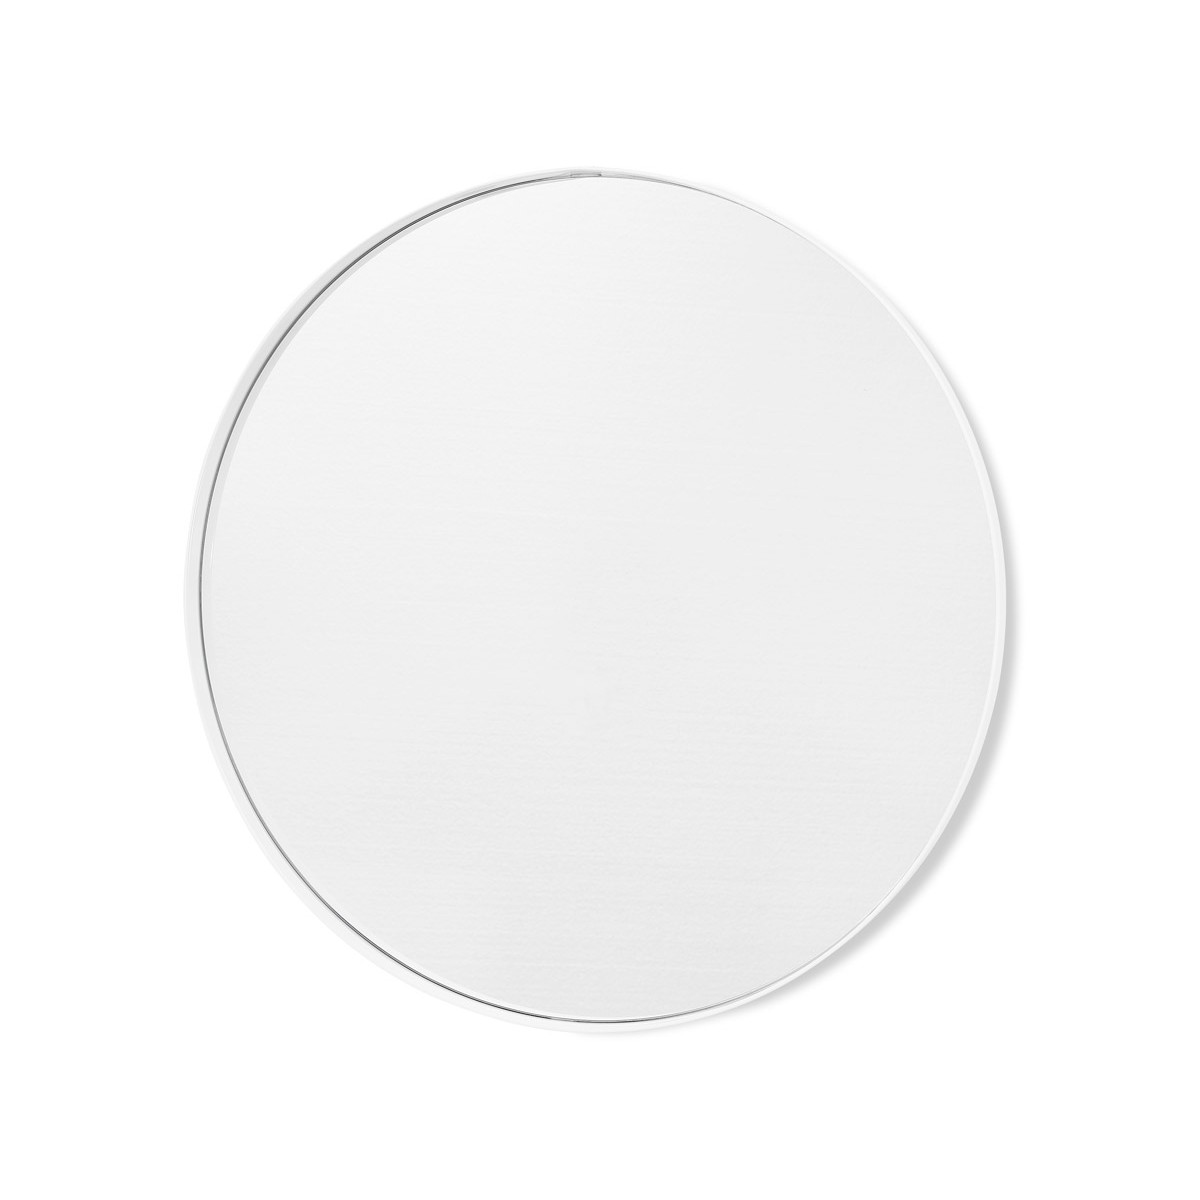 https://cdnmodules.techneb.com/shop/48605-zoom/specchio-design-round-in-metal-605-cm-priska-bianco.jpg